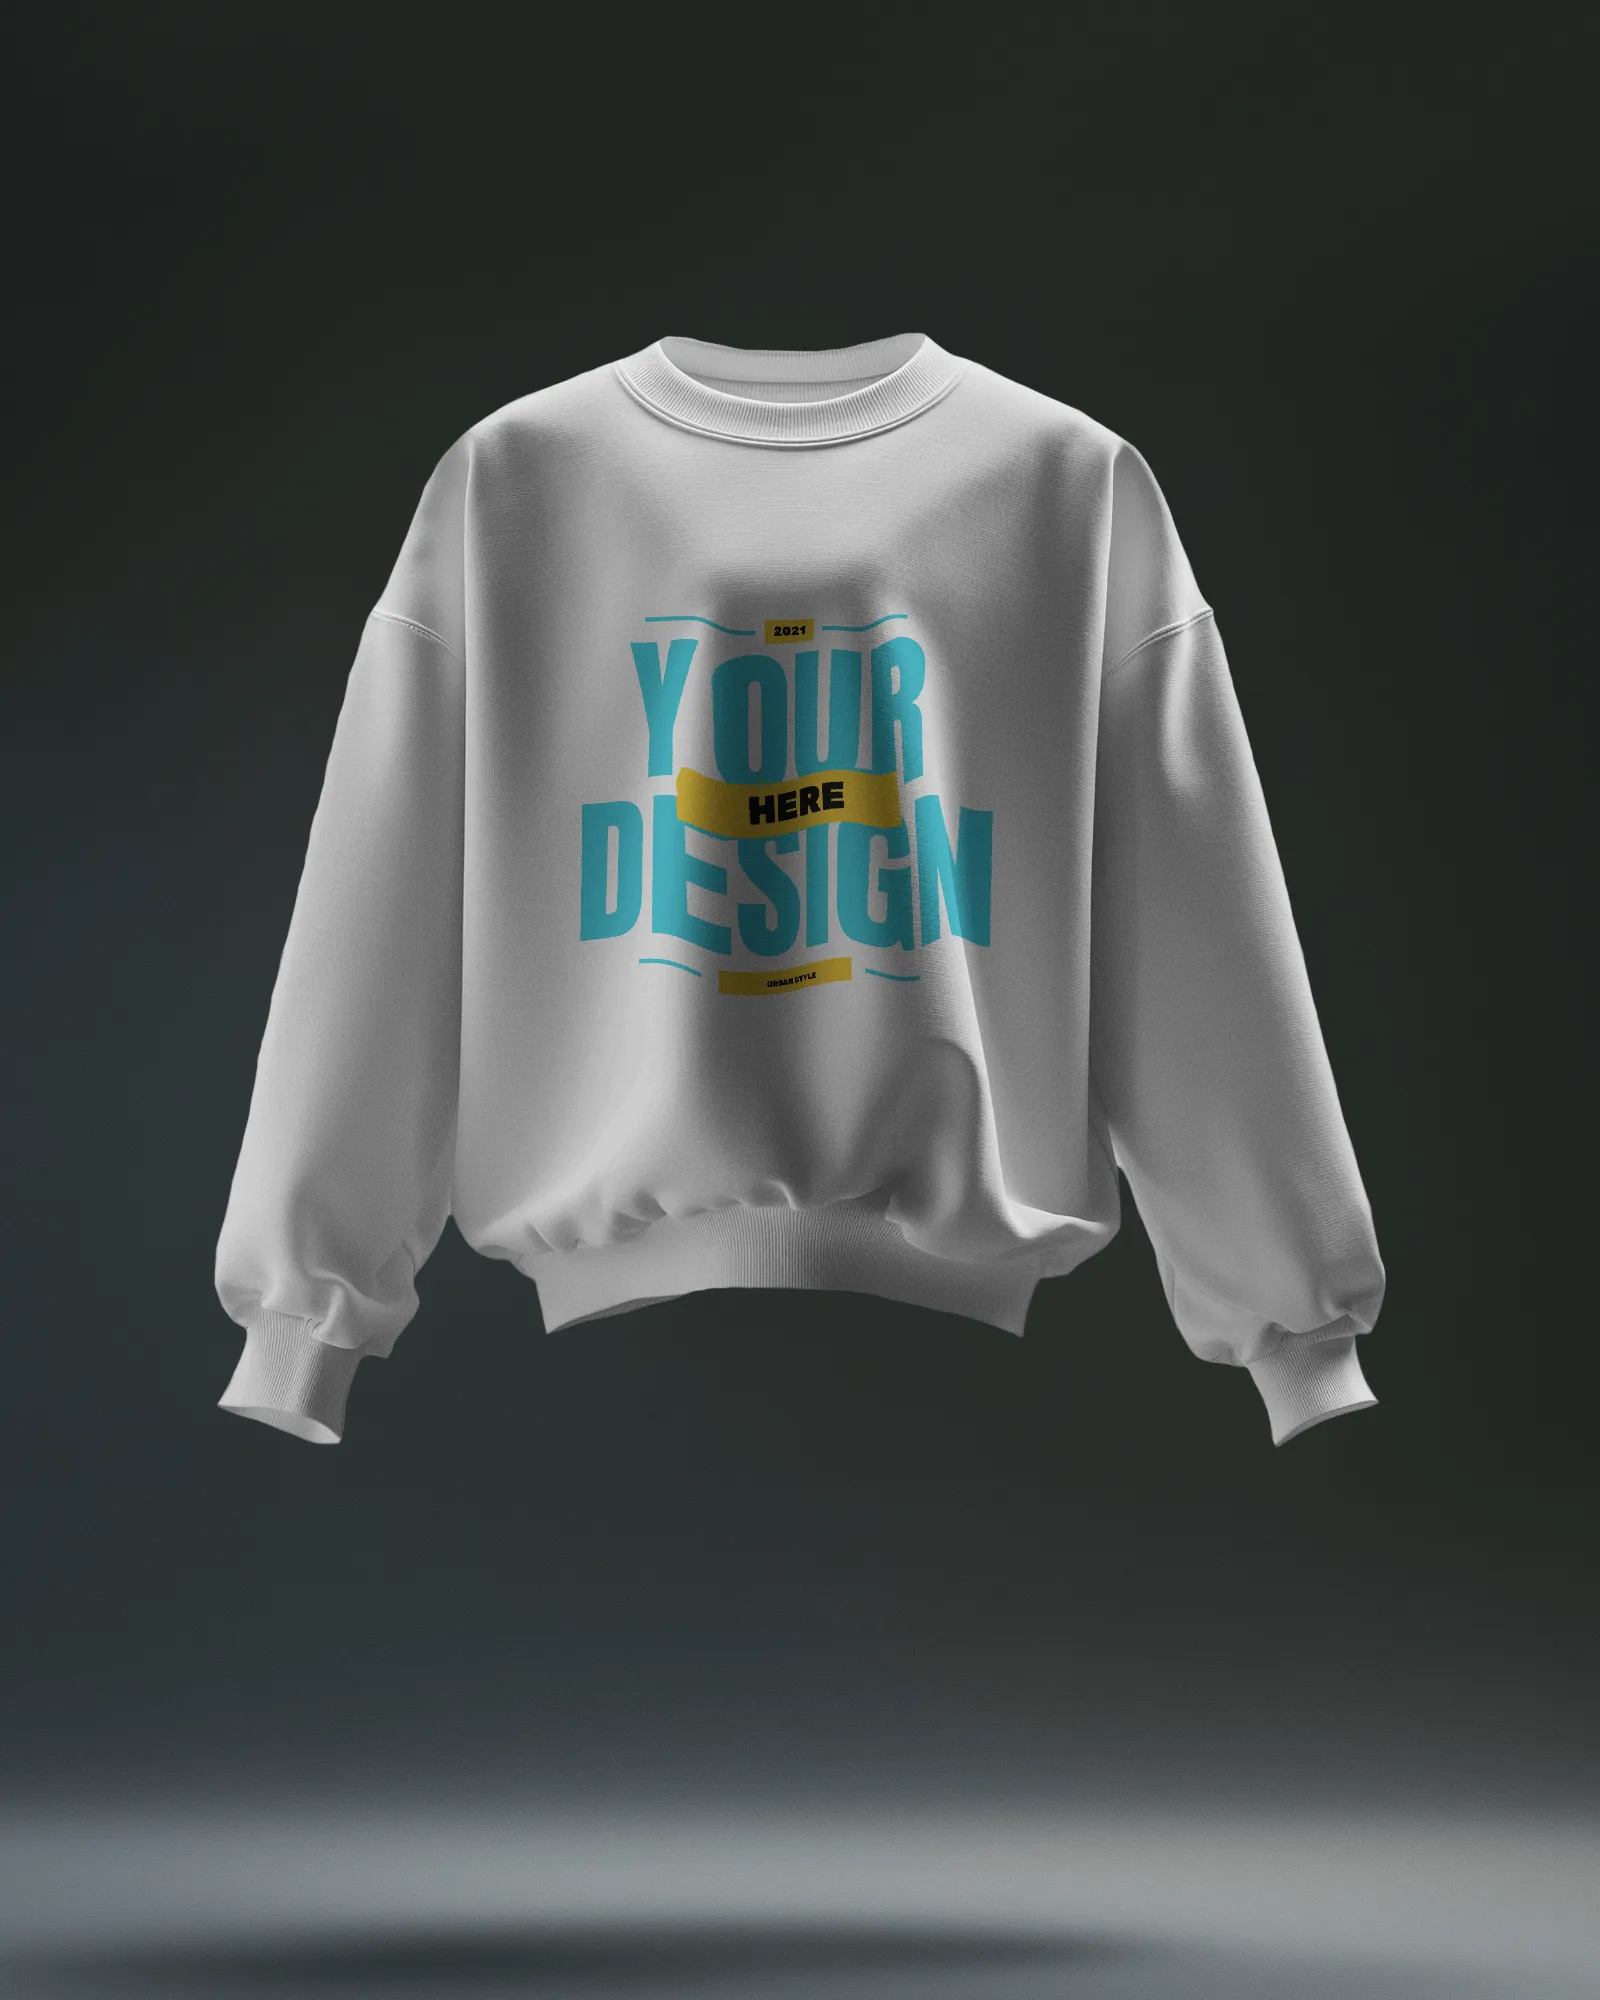 photorealistic 3d sweatshirt mockup in air